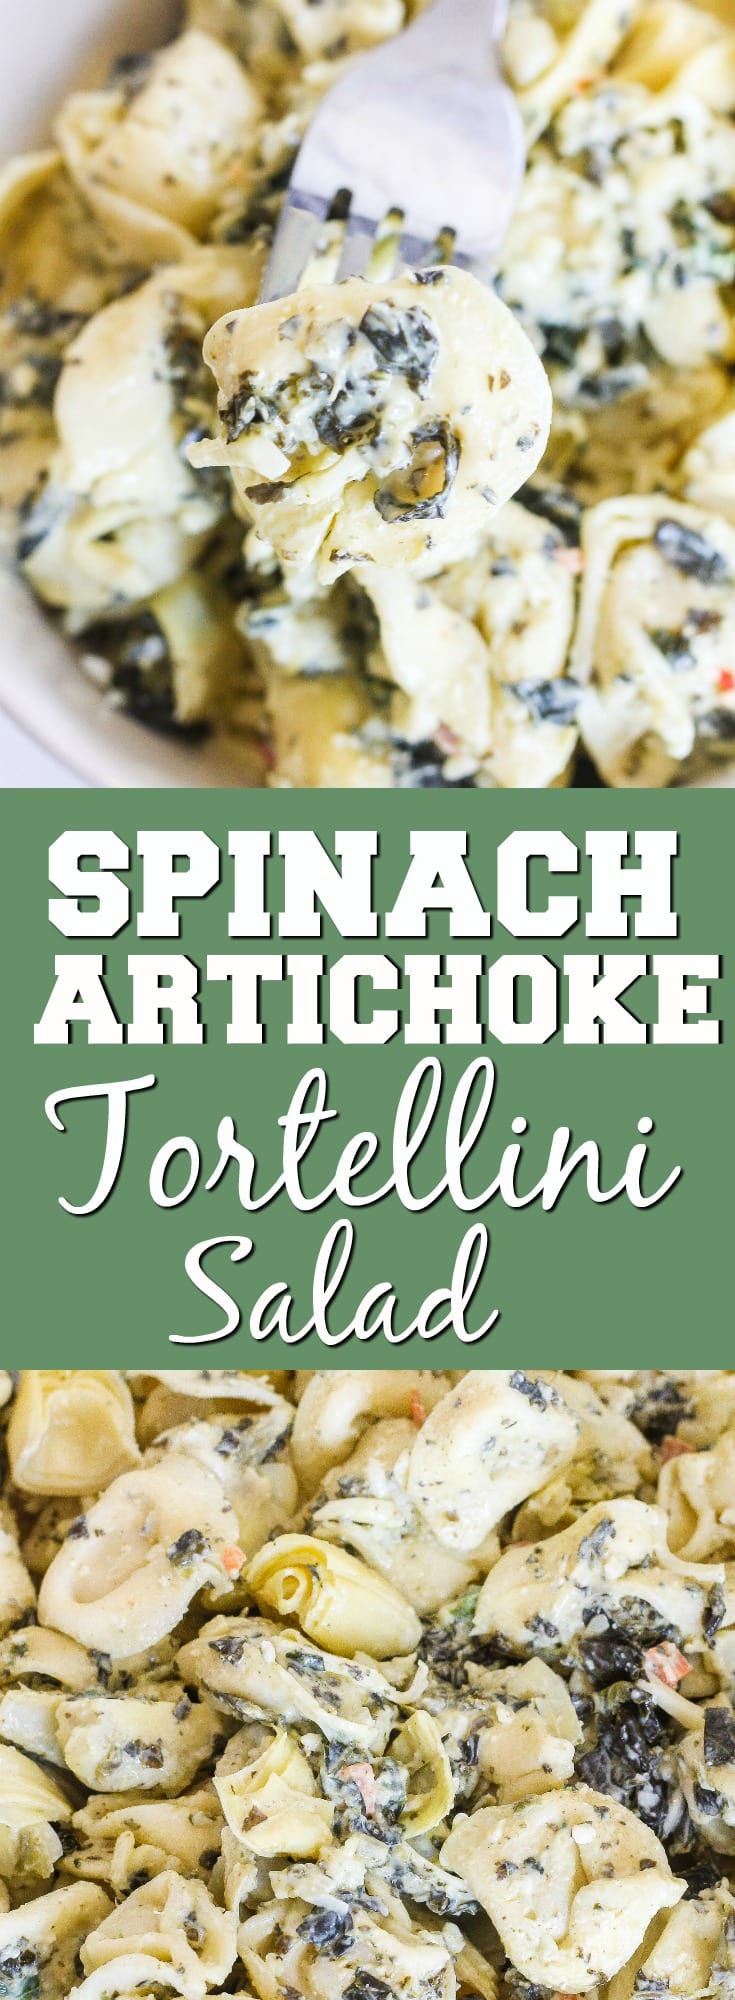 Spinach Artichoke Tortellini Salad